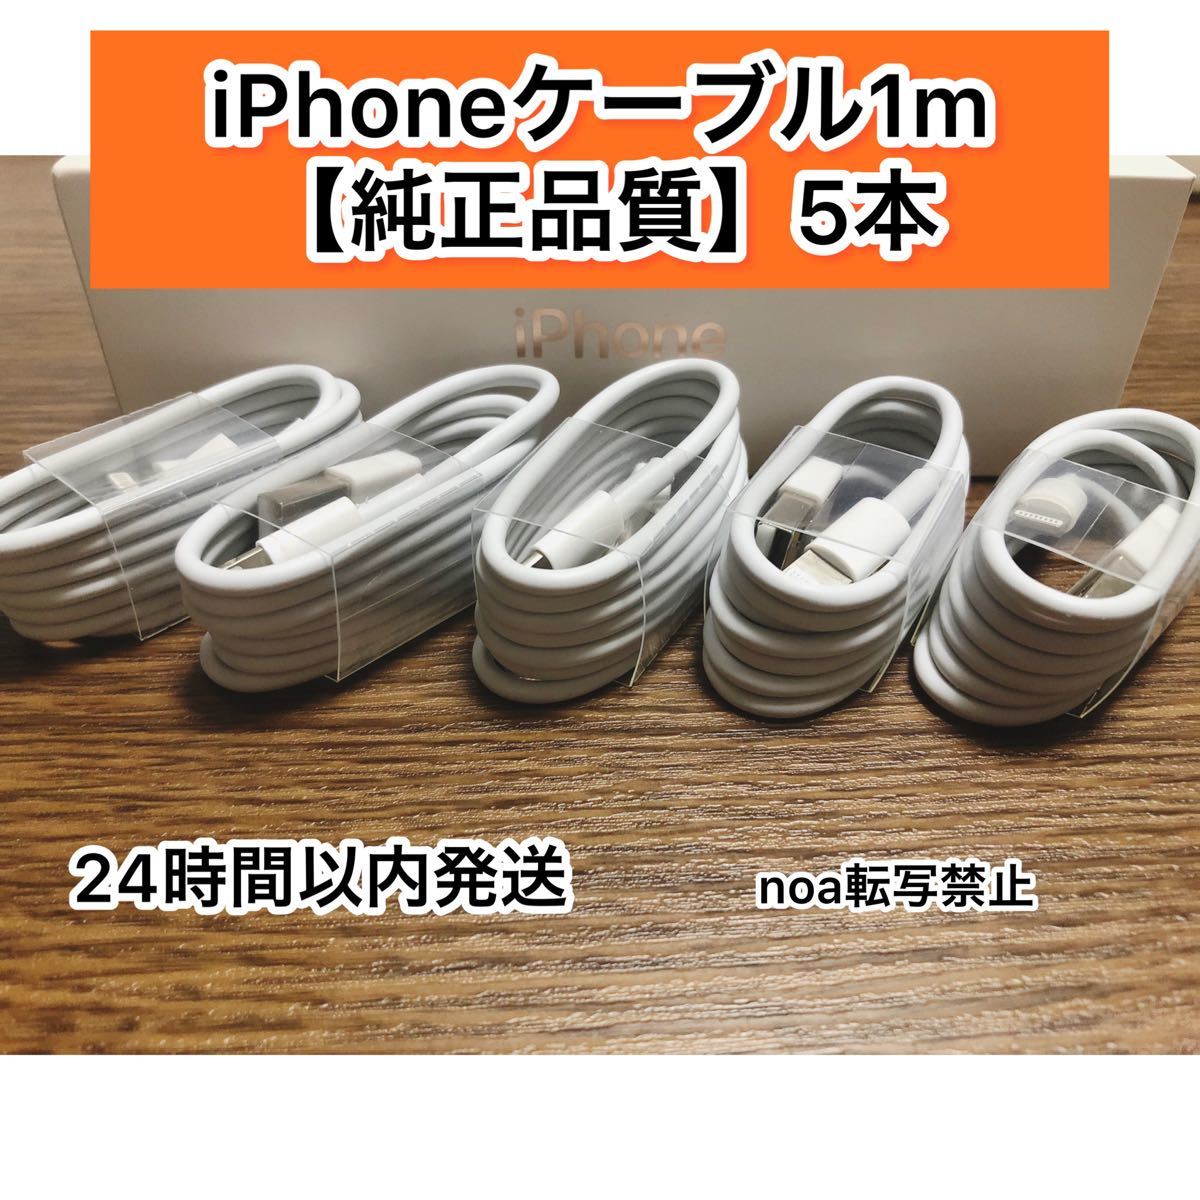 iPhone充電器 iPhoneライトニングケーブル 純正品質 1m 5本【発送前に必ず動作確認します！】【高品質・耐久性】